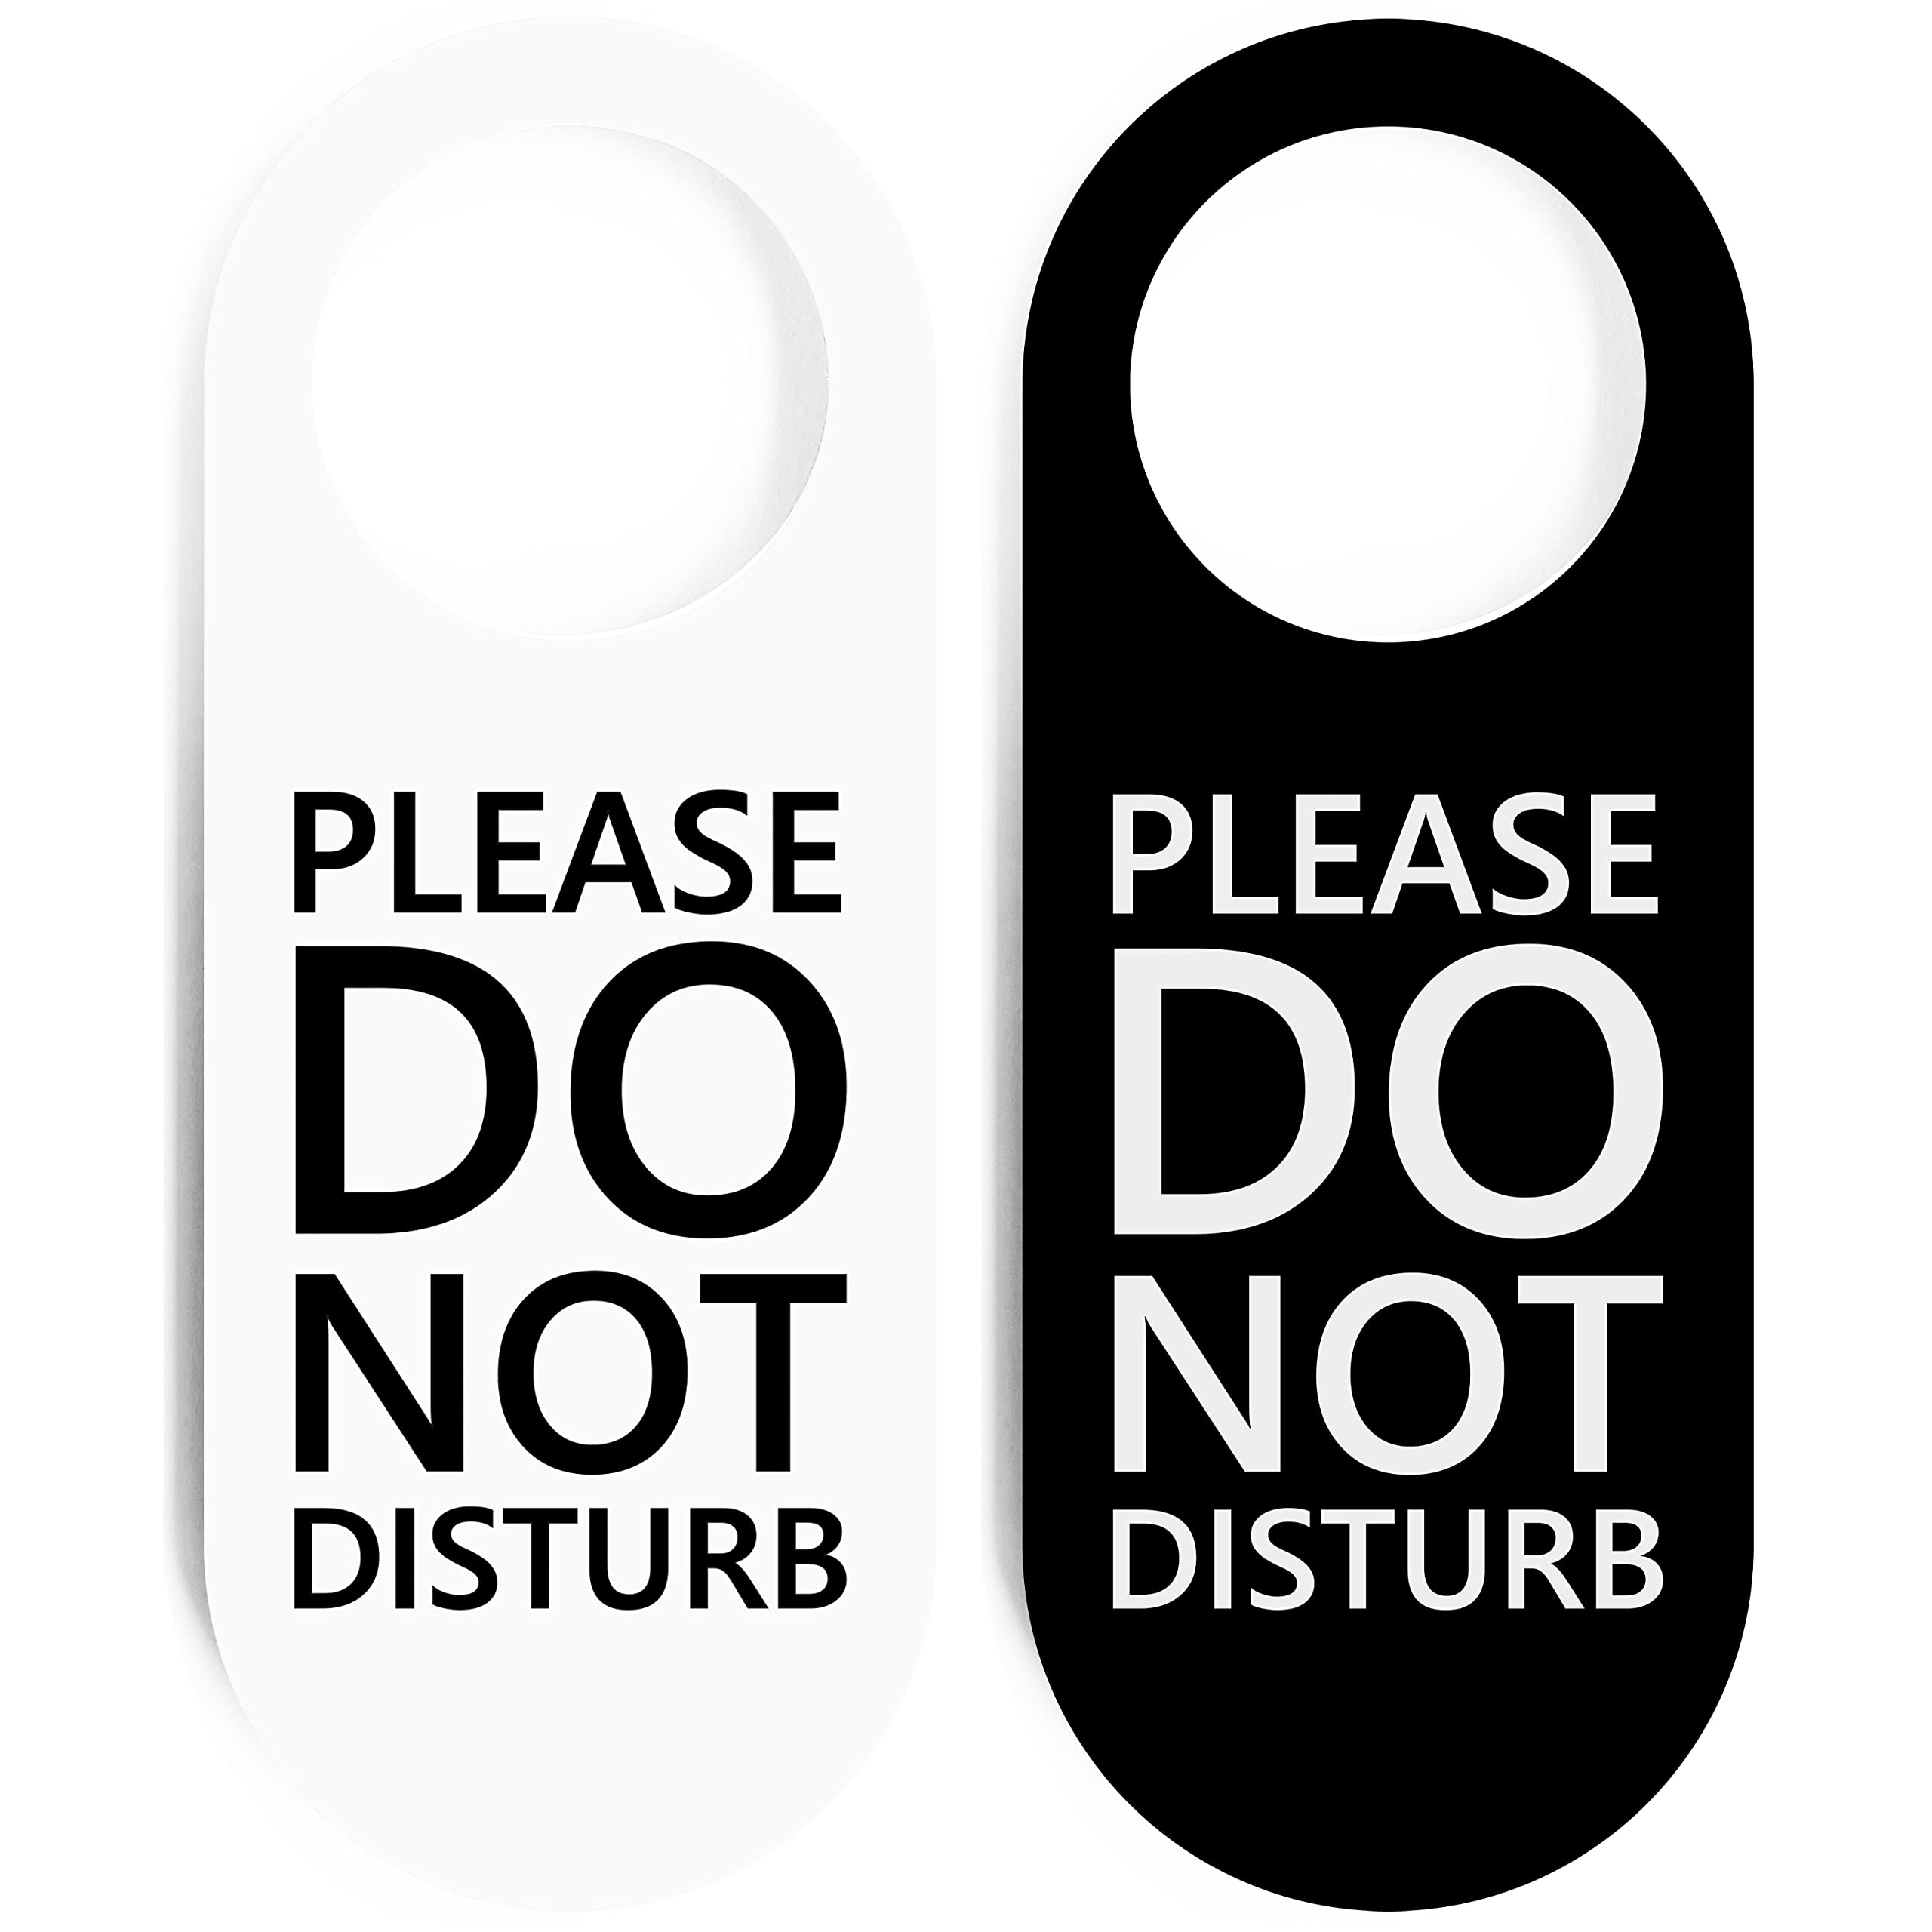 Do Not Disturb sign displayed